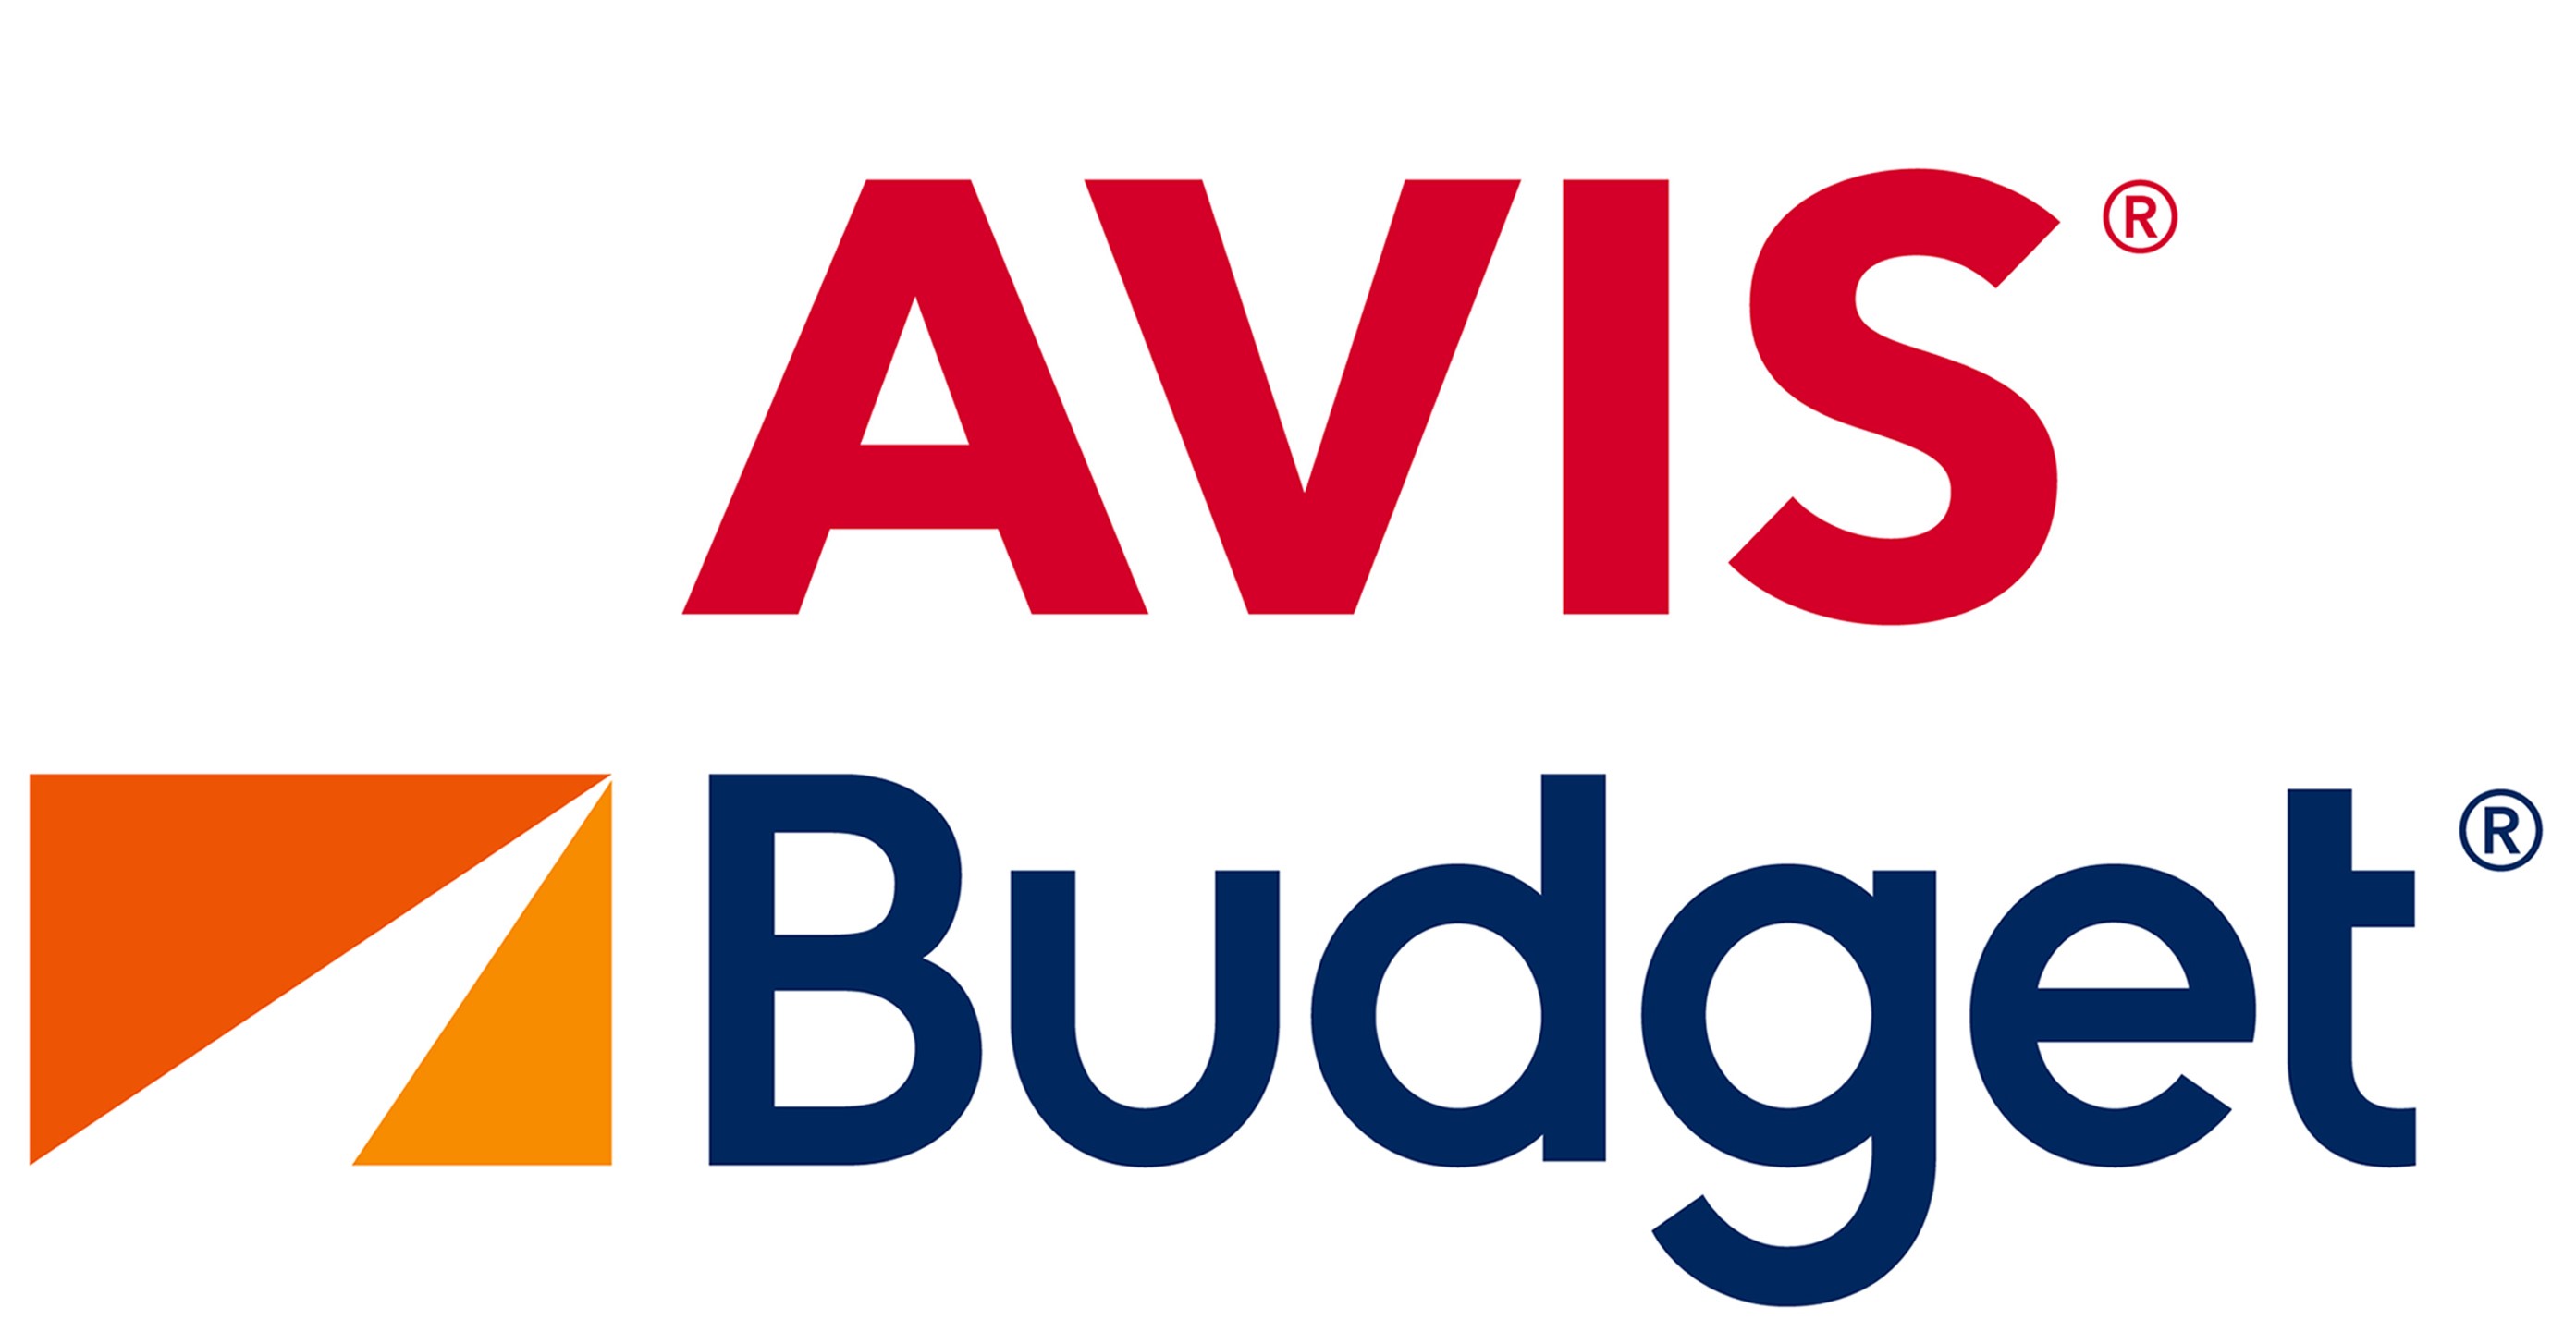 sacl_car_avis_budget_group_joined_logos